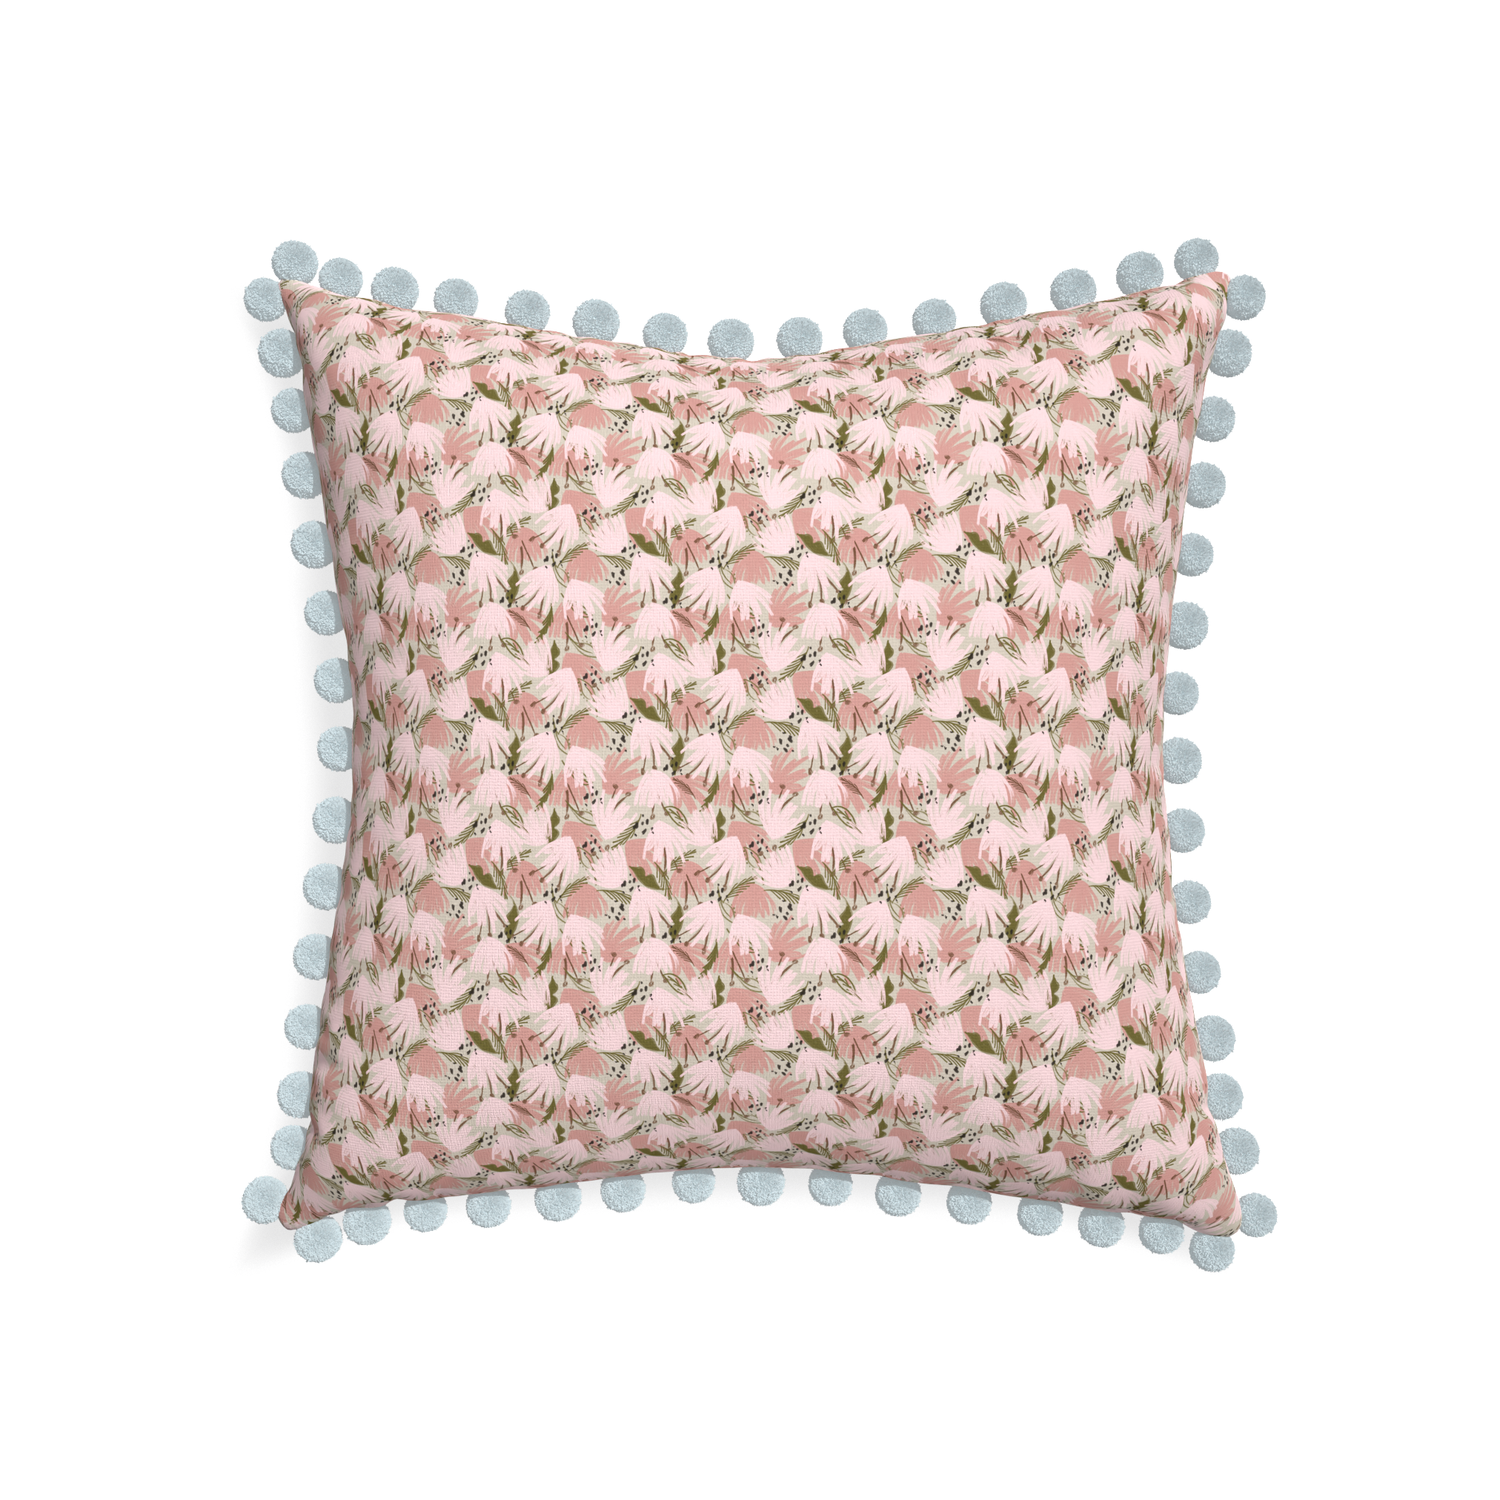 22-square eden pink custom pillow with powder pom pom on white background